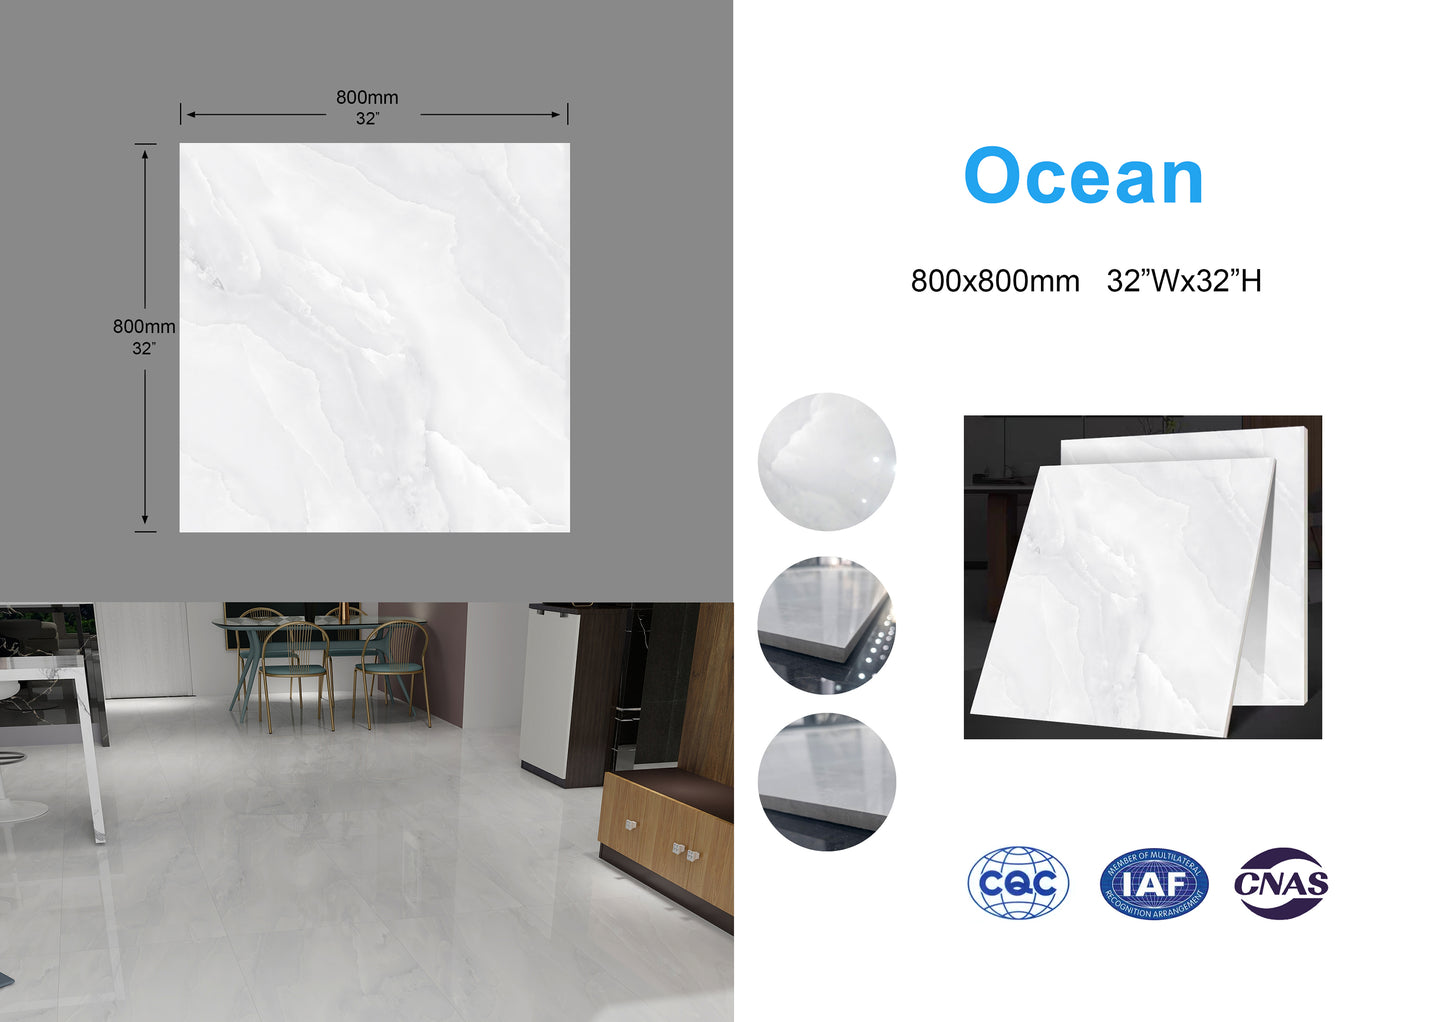 Ocean family Full Polished Glazed Tile light gray 32"x32" 3pcs/box 21.33sf/box $1.59/sf (15 days return/exchange) Bulk Deal 1000sf+ $1.39/SF(No return/no exchange)